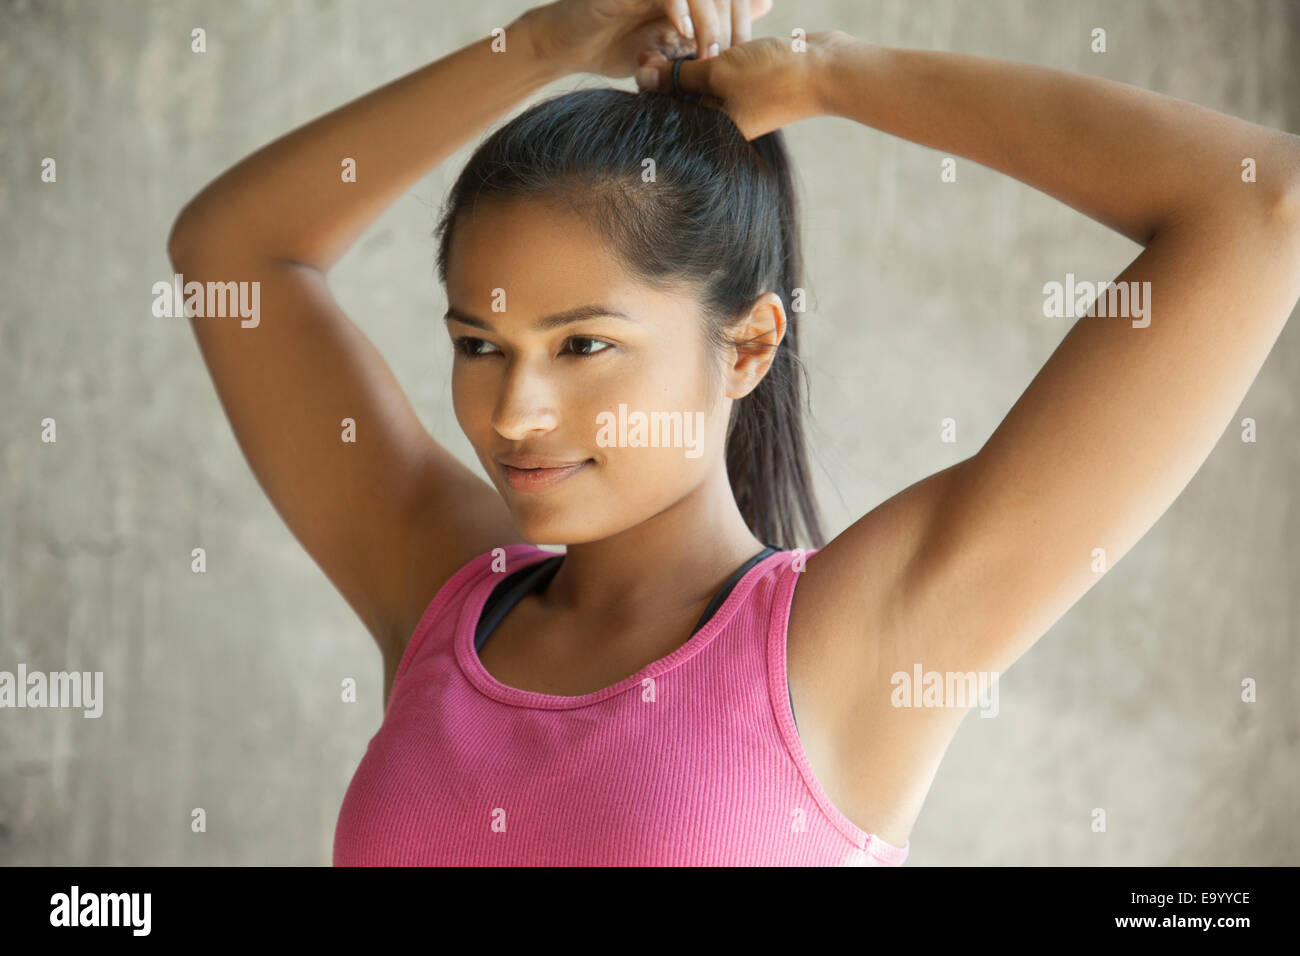 Woman tying up hair Stock Photo